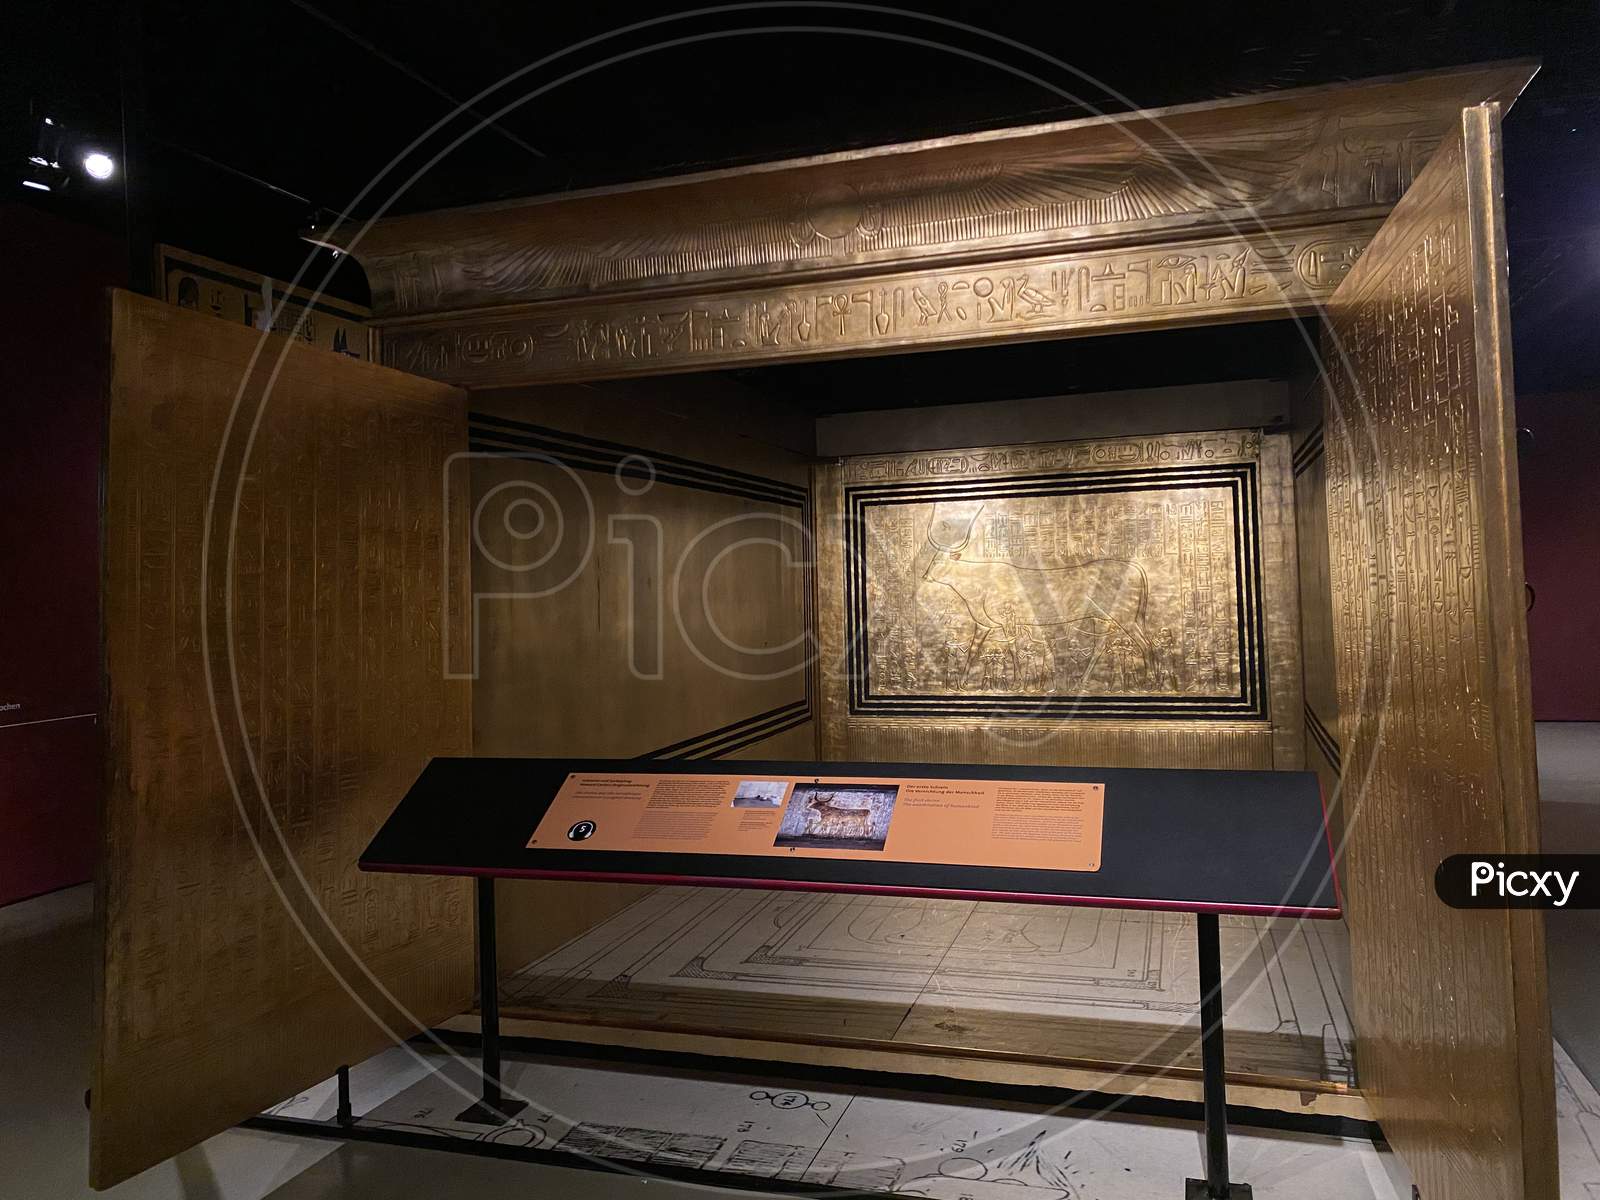 View Into Outer Golden Shrine Containing The Mummy And Sarcophagus Of Tutankhamun. 14.03.2021 - Oerlikon, Switzerland.